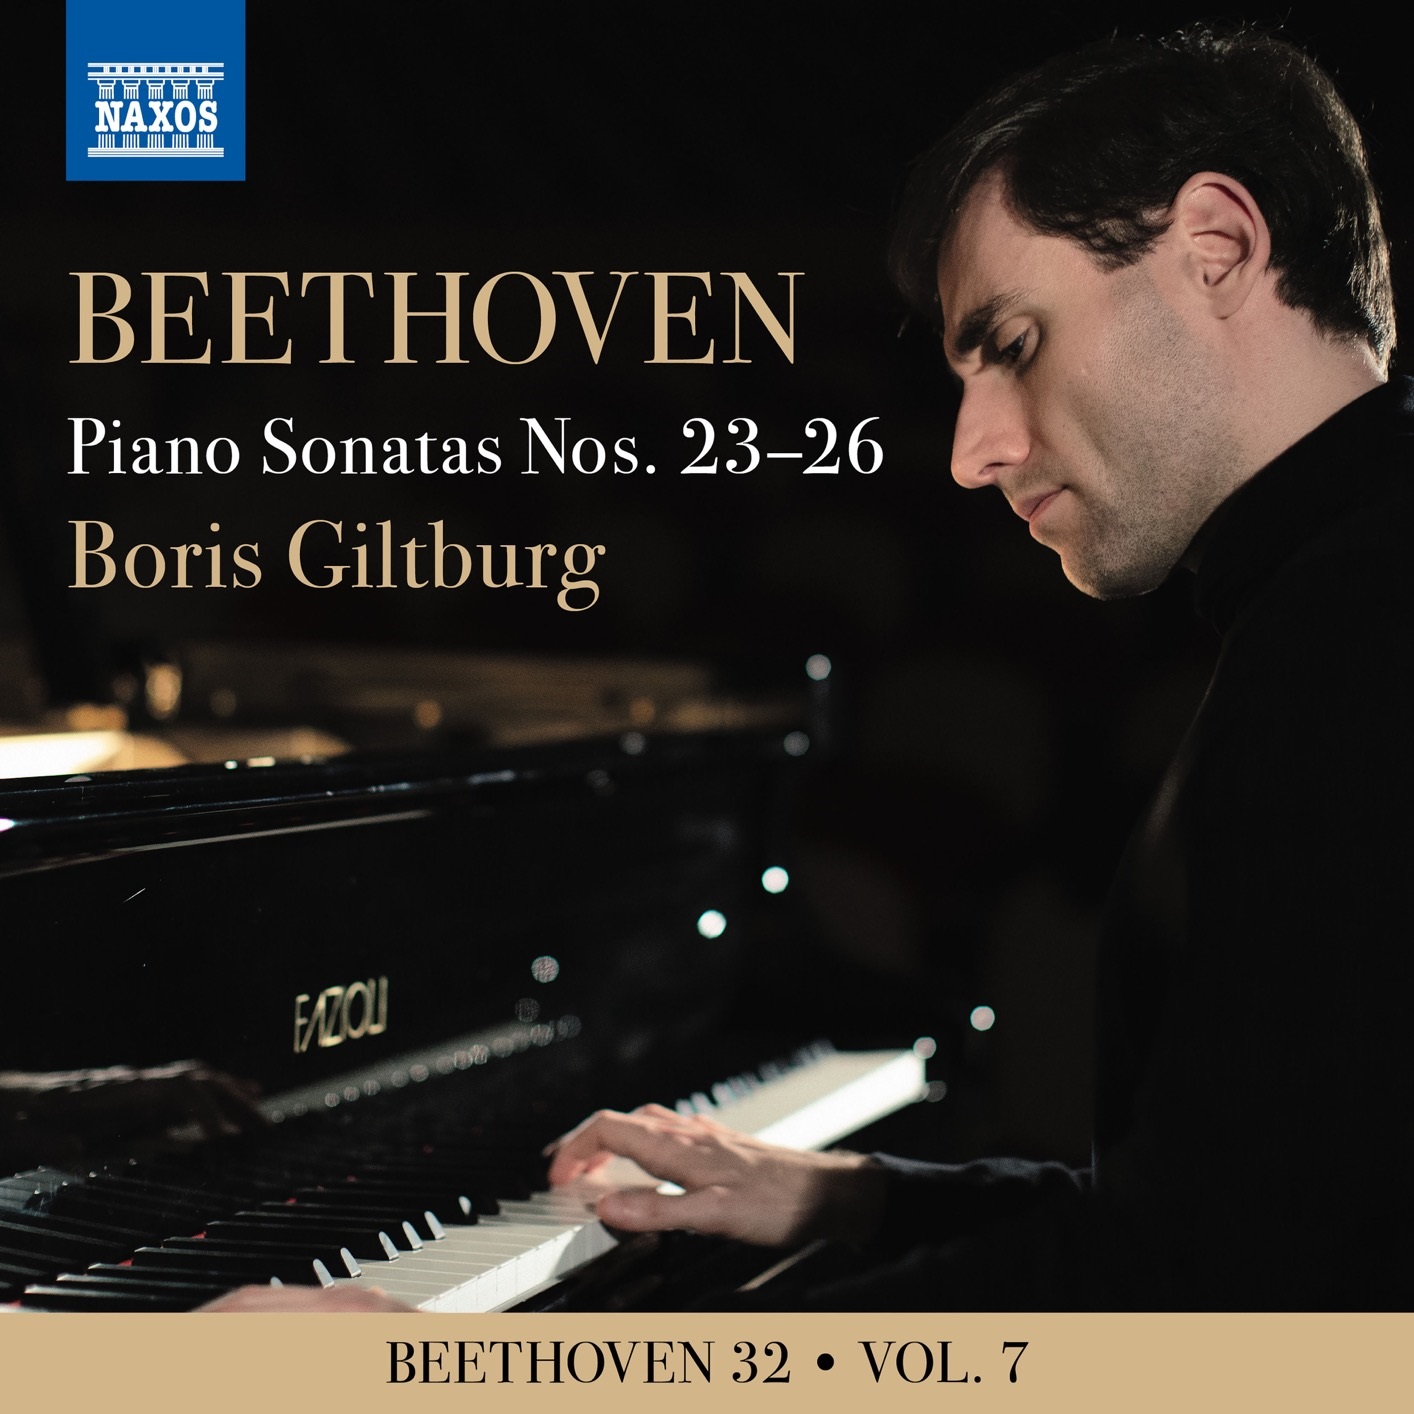 Boris Giltburg - Beethoven 32, Vol. 7: Piano Sonatas Nos. 23-26 (2020) [FLAC 24bit/96kHz]